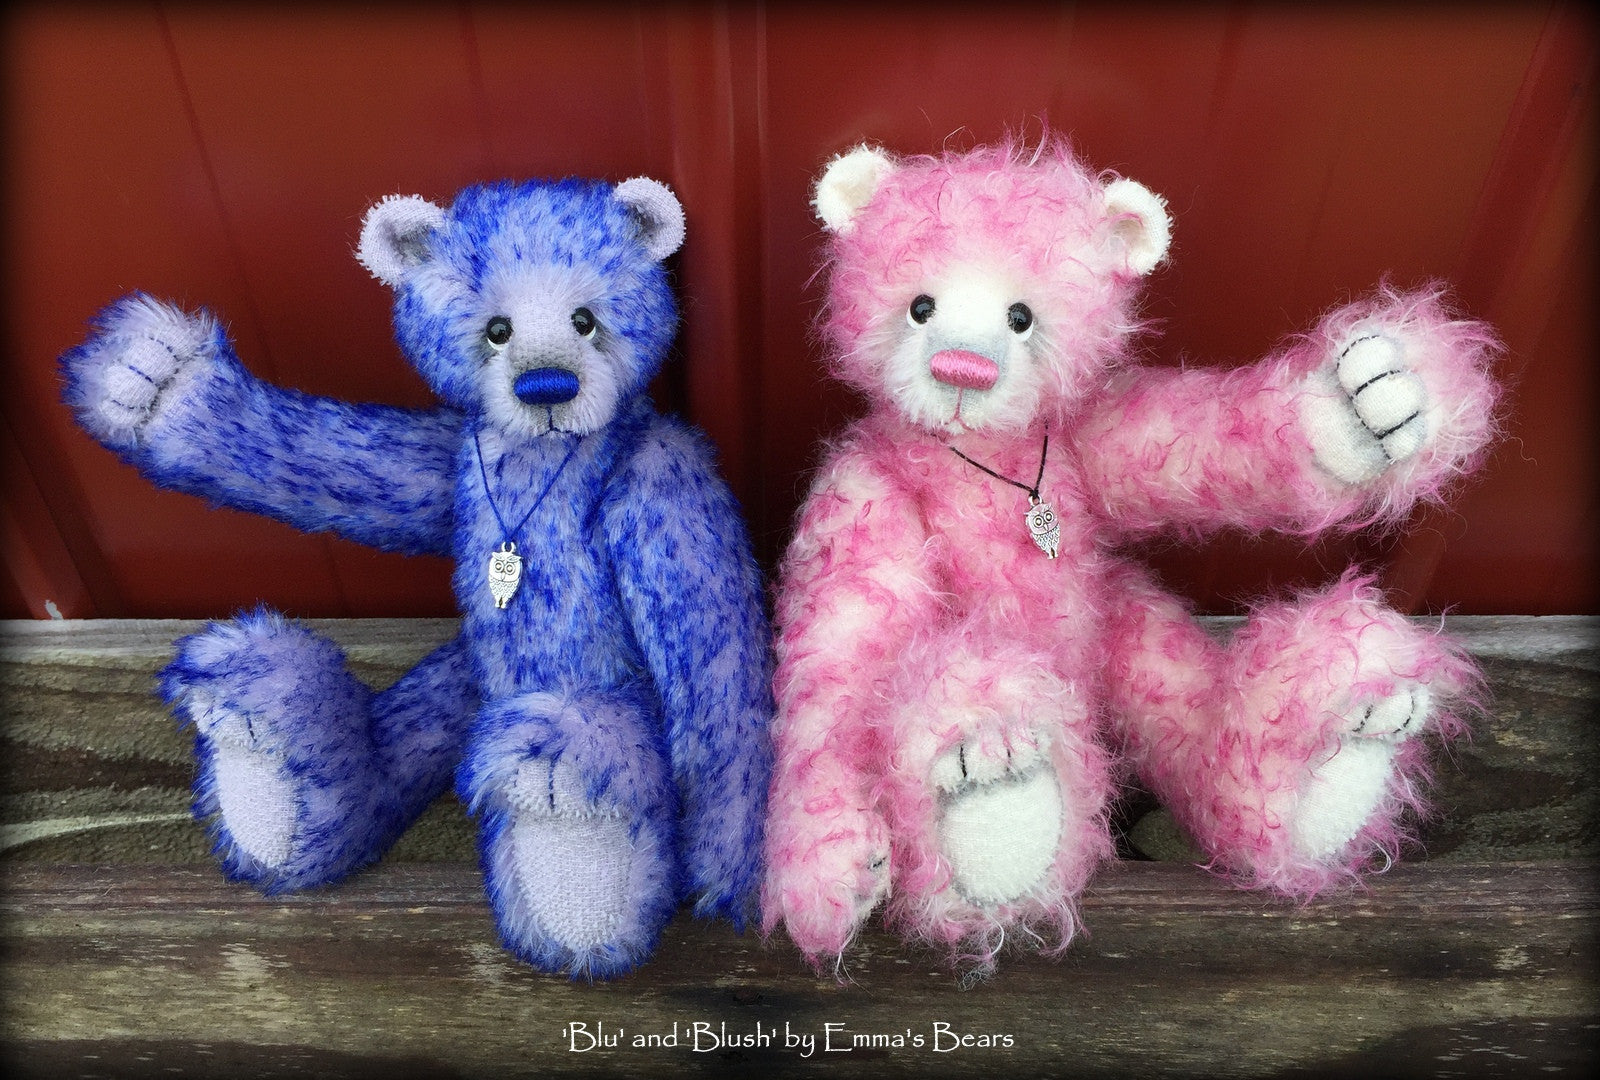 Blu - 9" mohair bear by Emmas Bears - OOAK